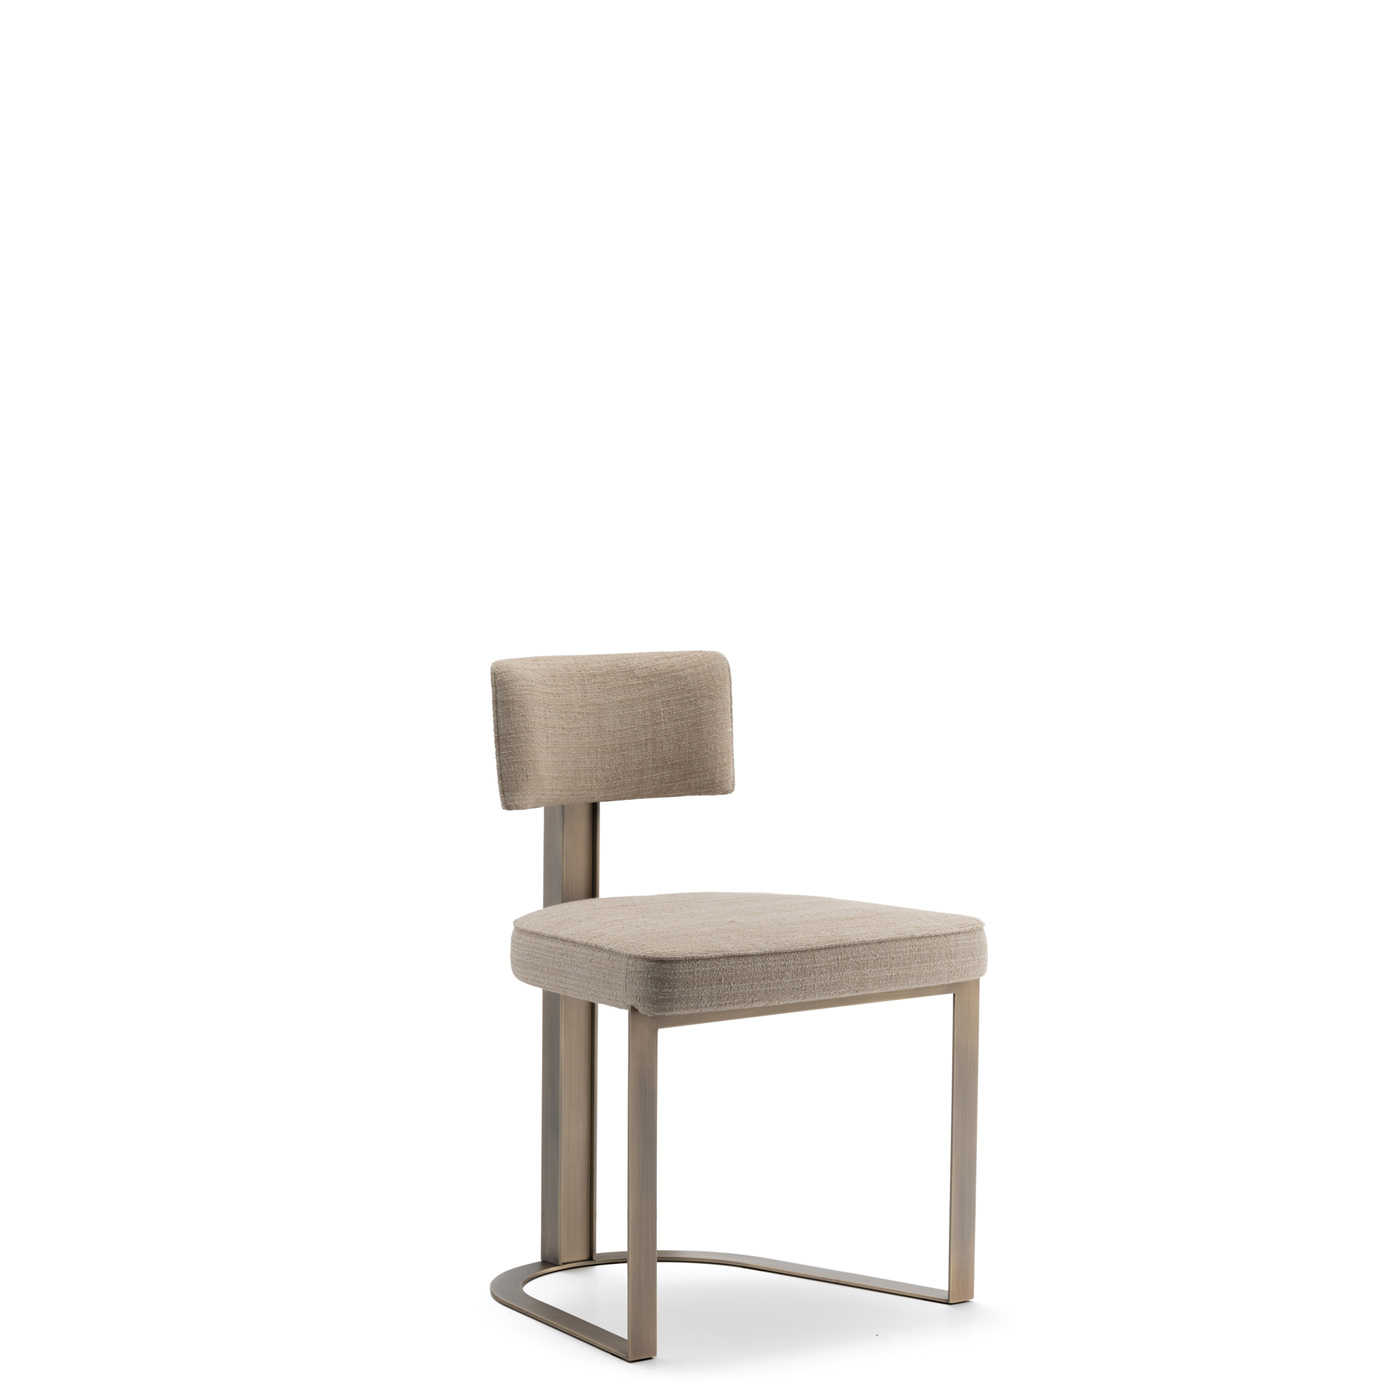 Sofas and seats - Sveva chair in Samsara fabric with horn inlays 6042B - Arcahorn